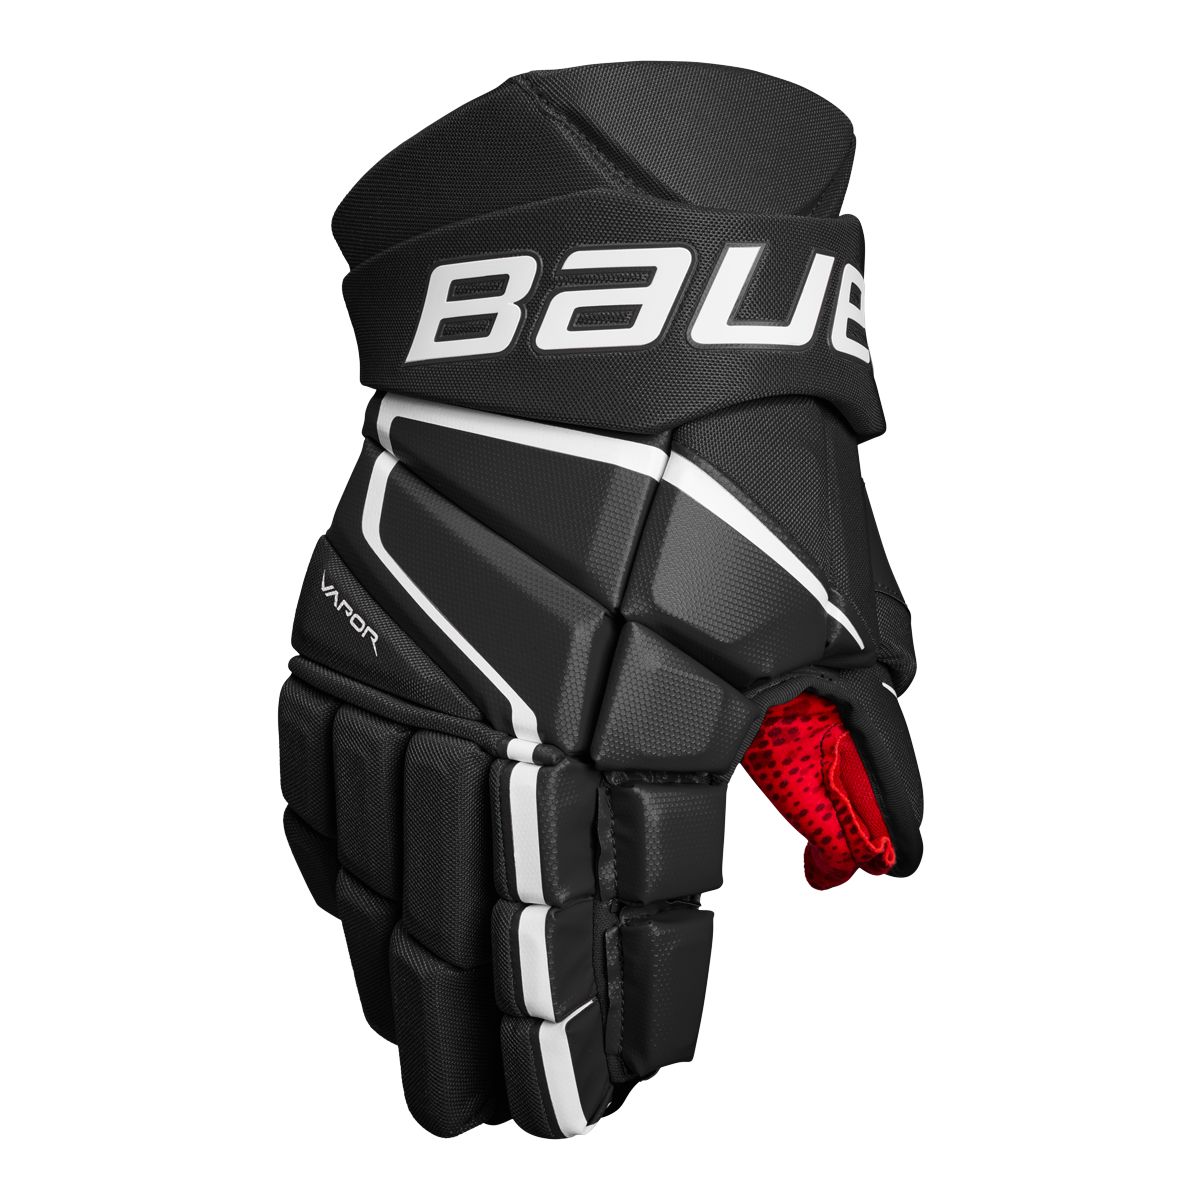 Bauer Vapor 3X Senior Hockey Gloves